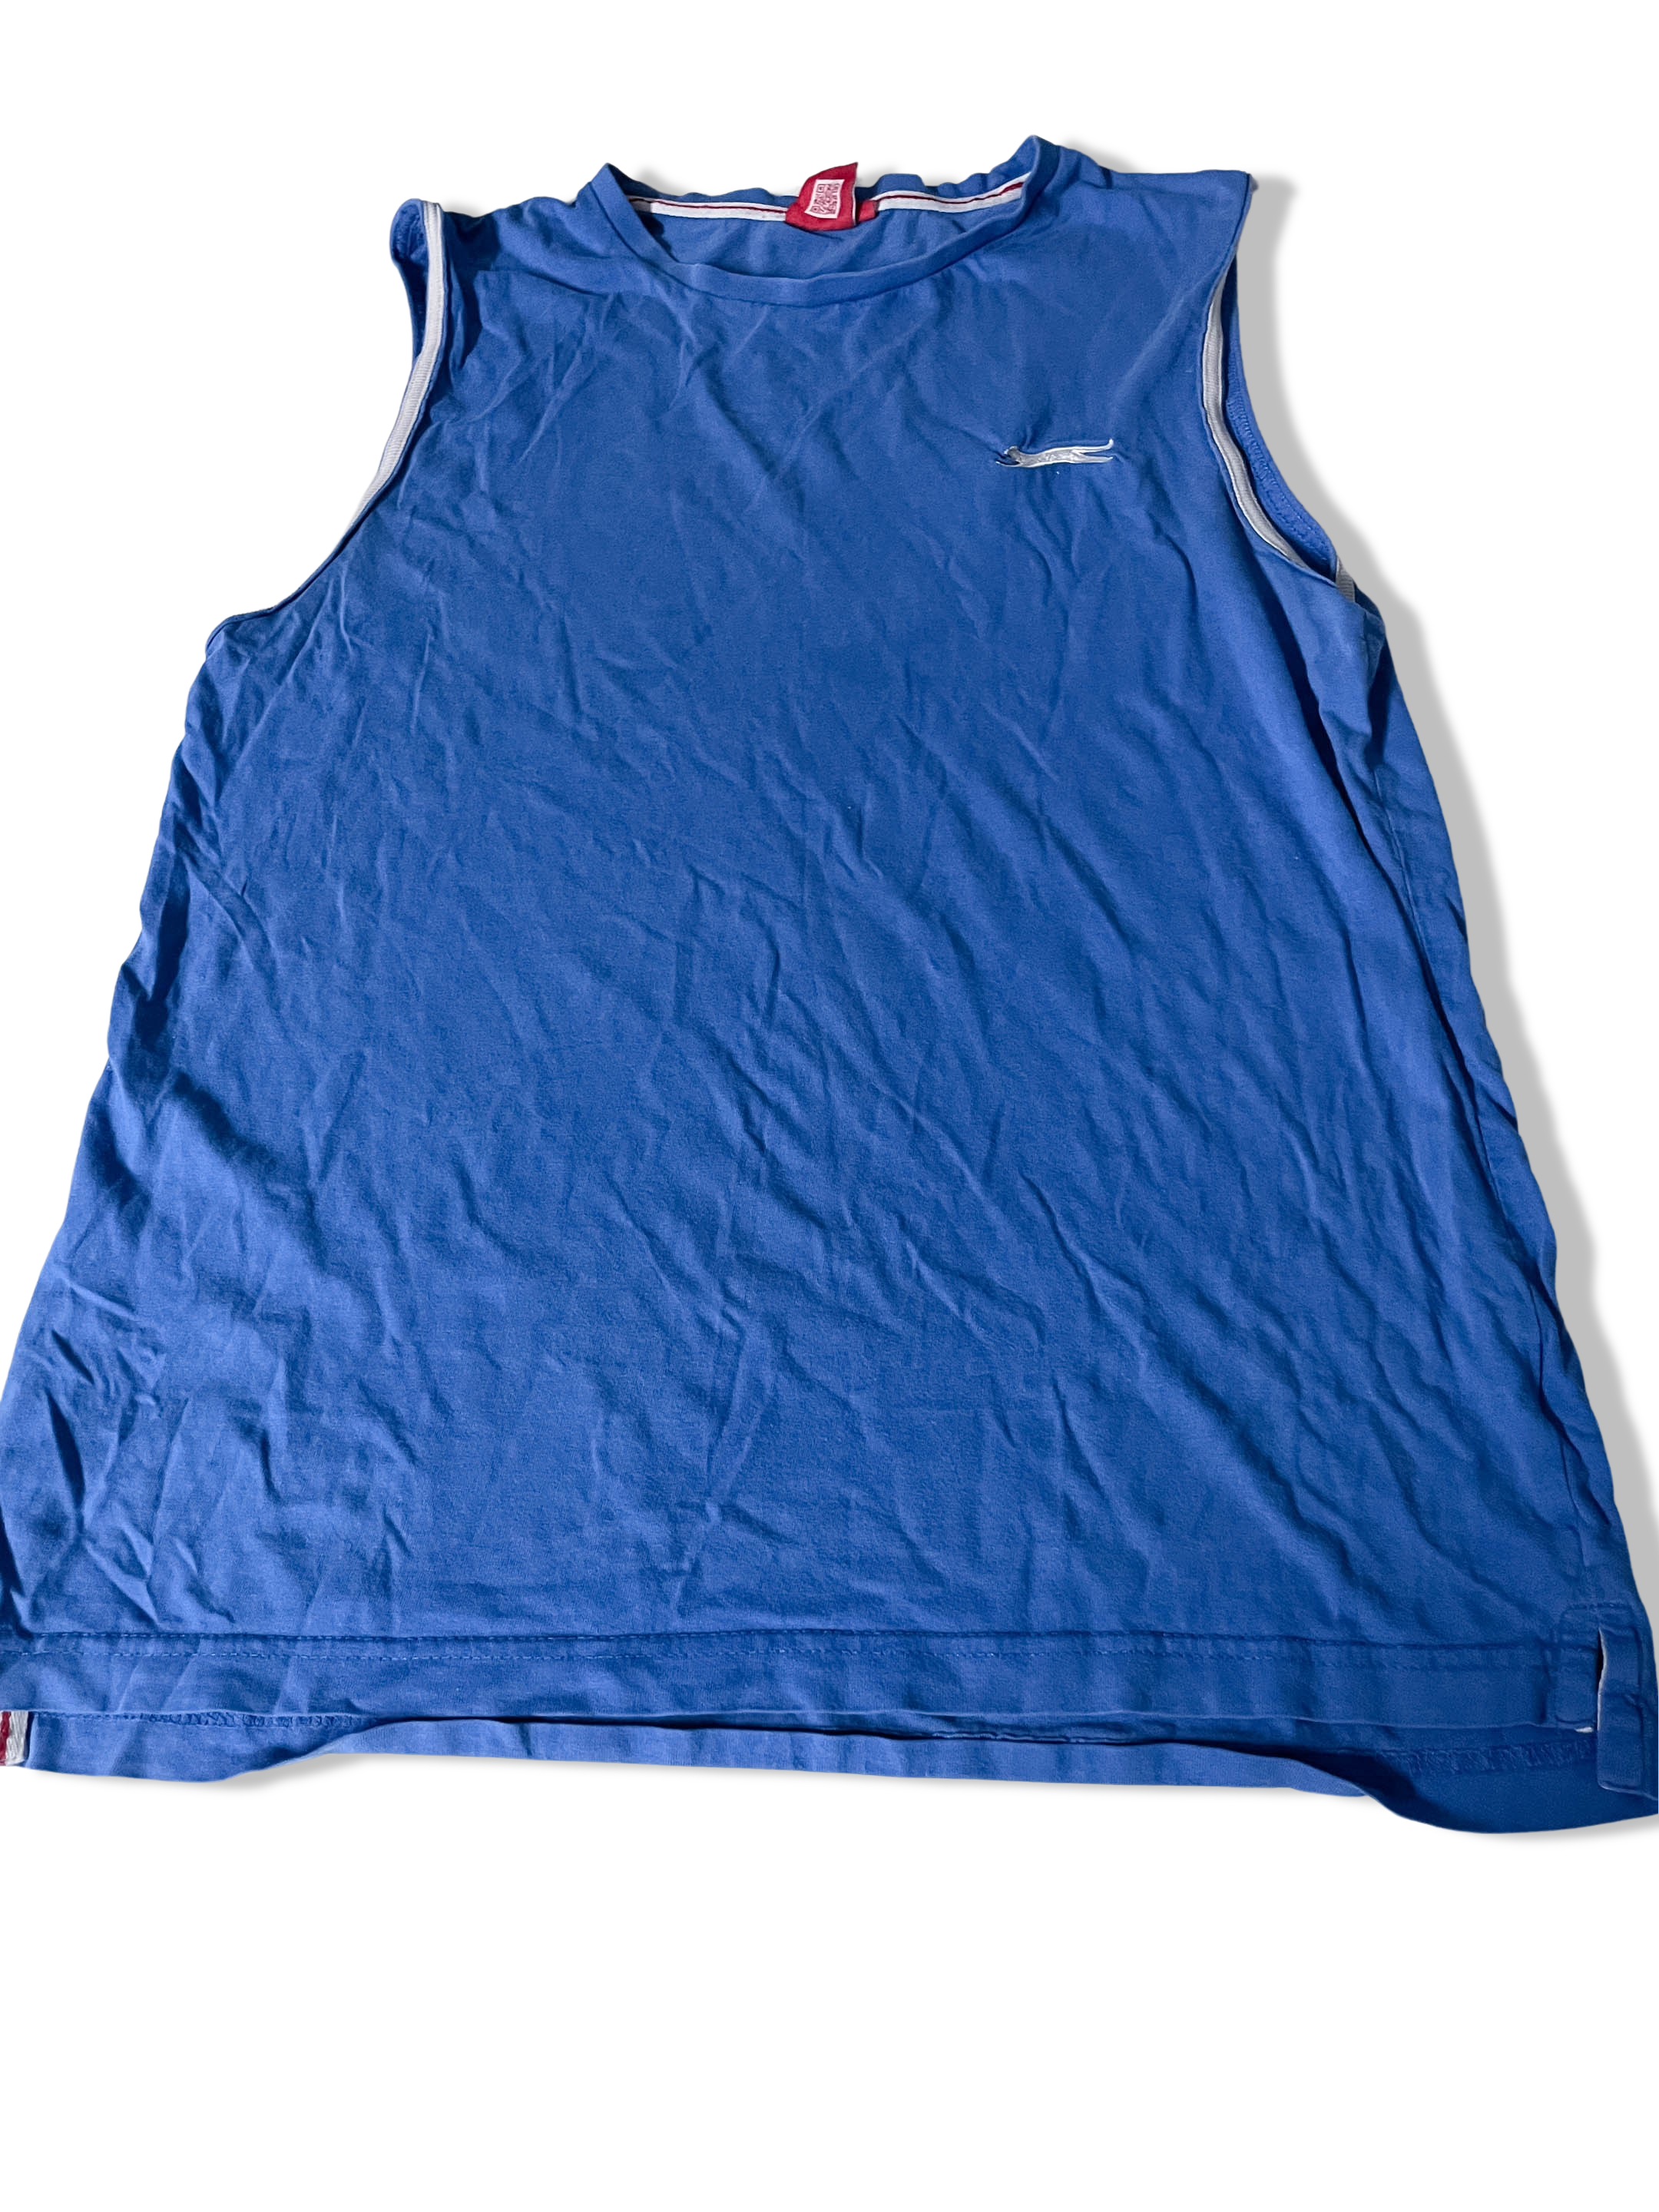 Vintage mens slazenger medium blue gym tank top